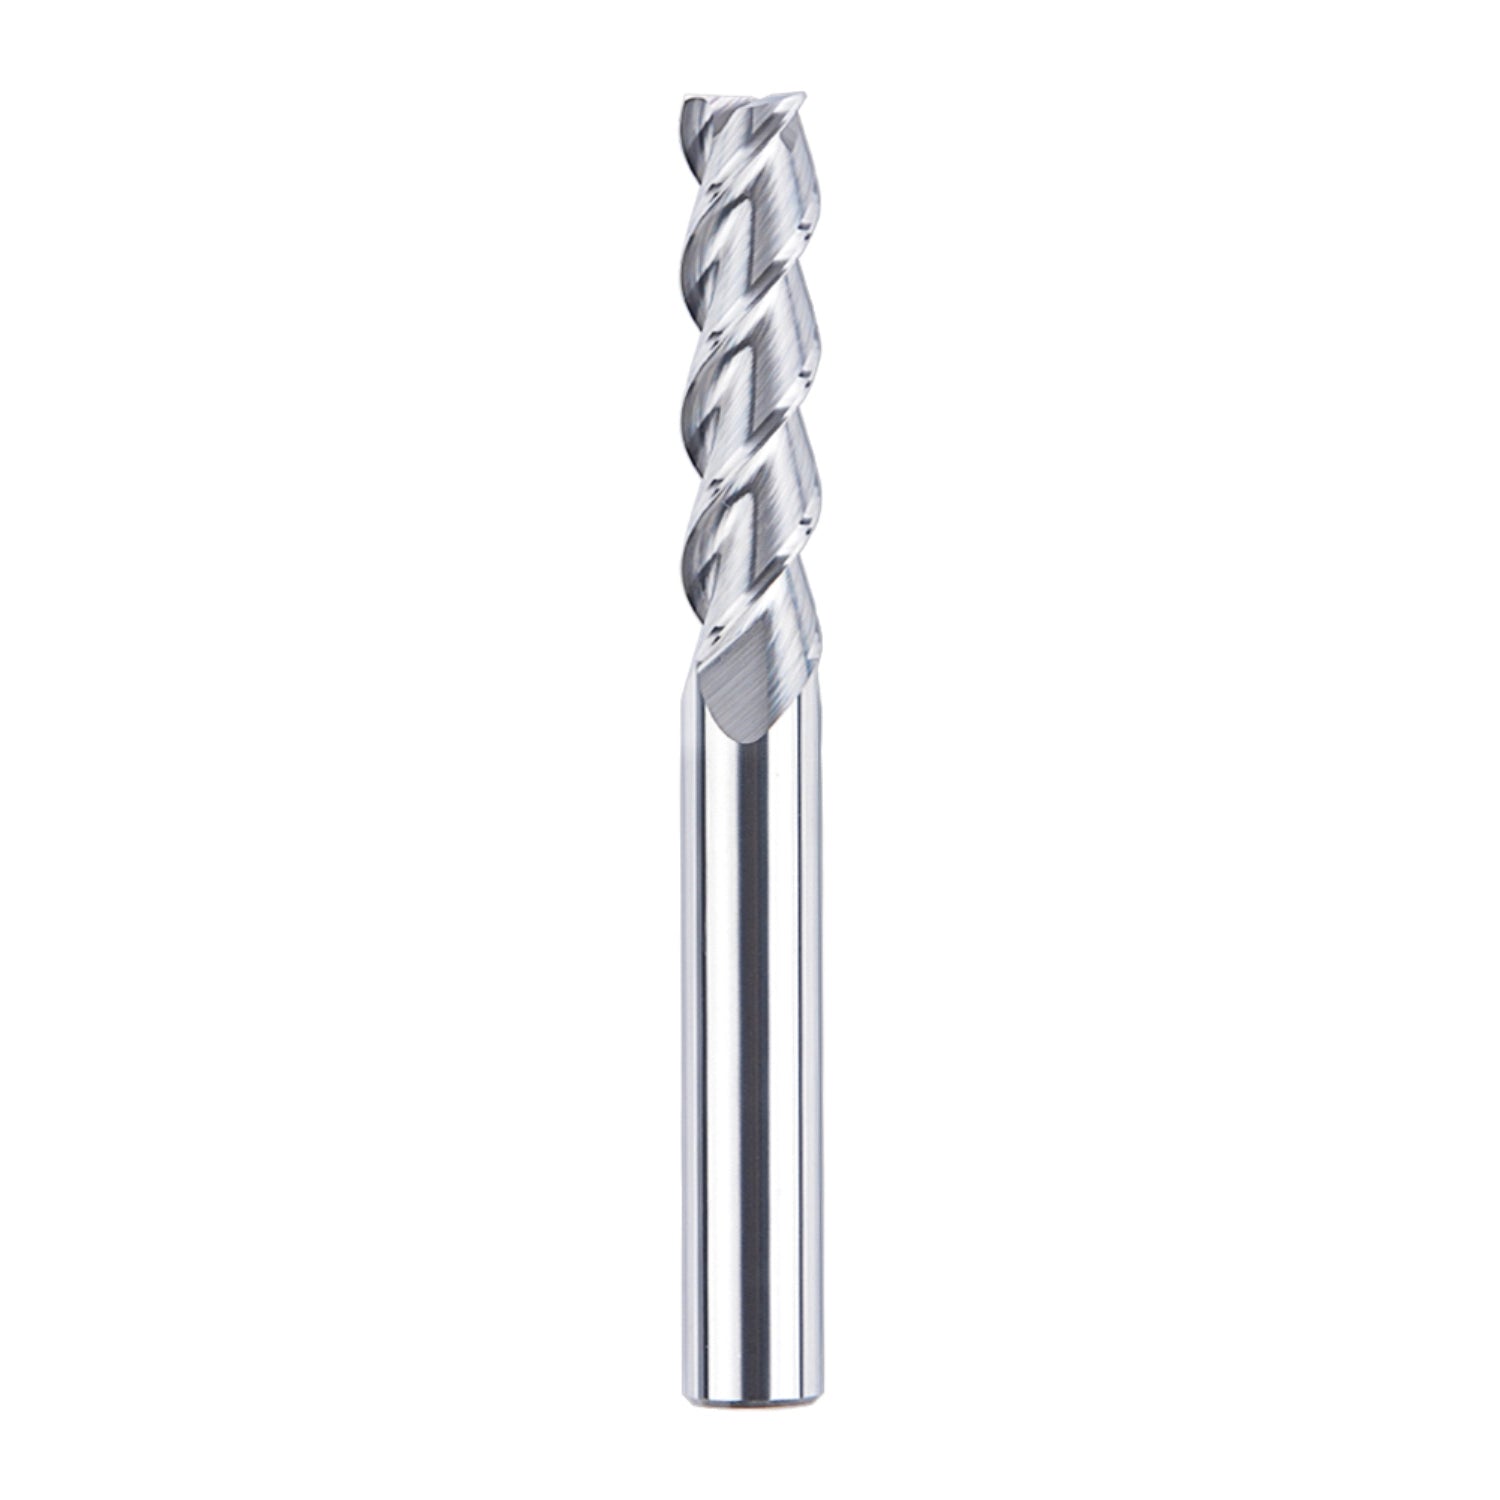 SpeTool 3 Flute End Mills For Aluminum Milling 3/8" Dia 3.5" Extra Long Bit